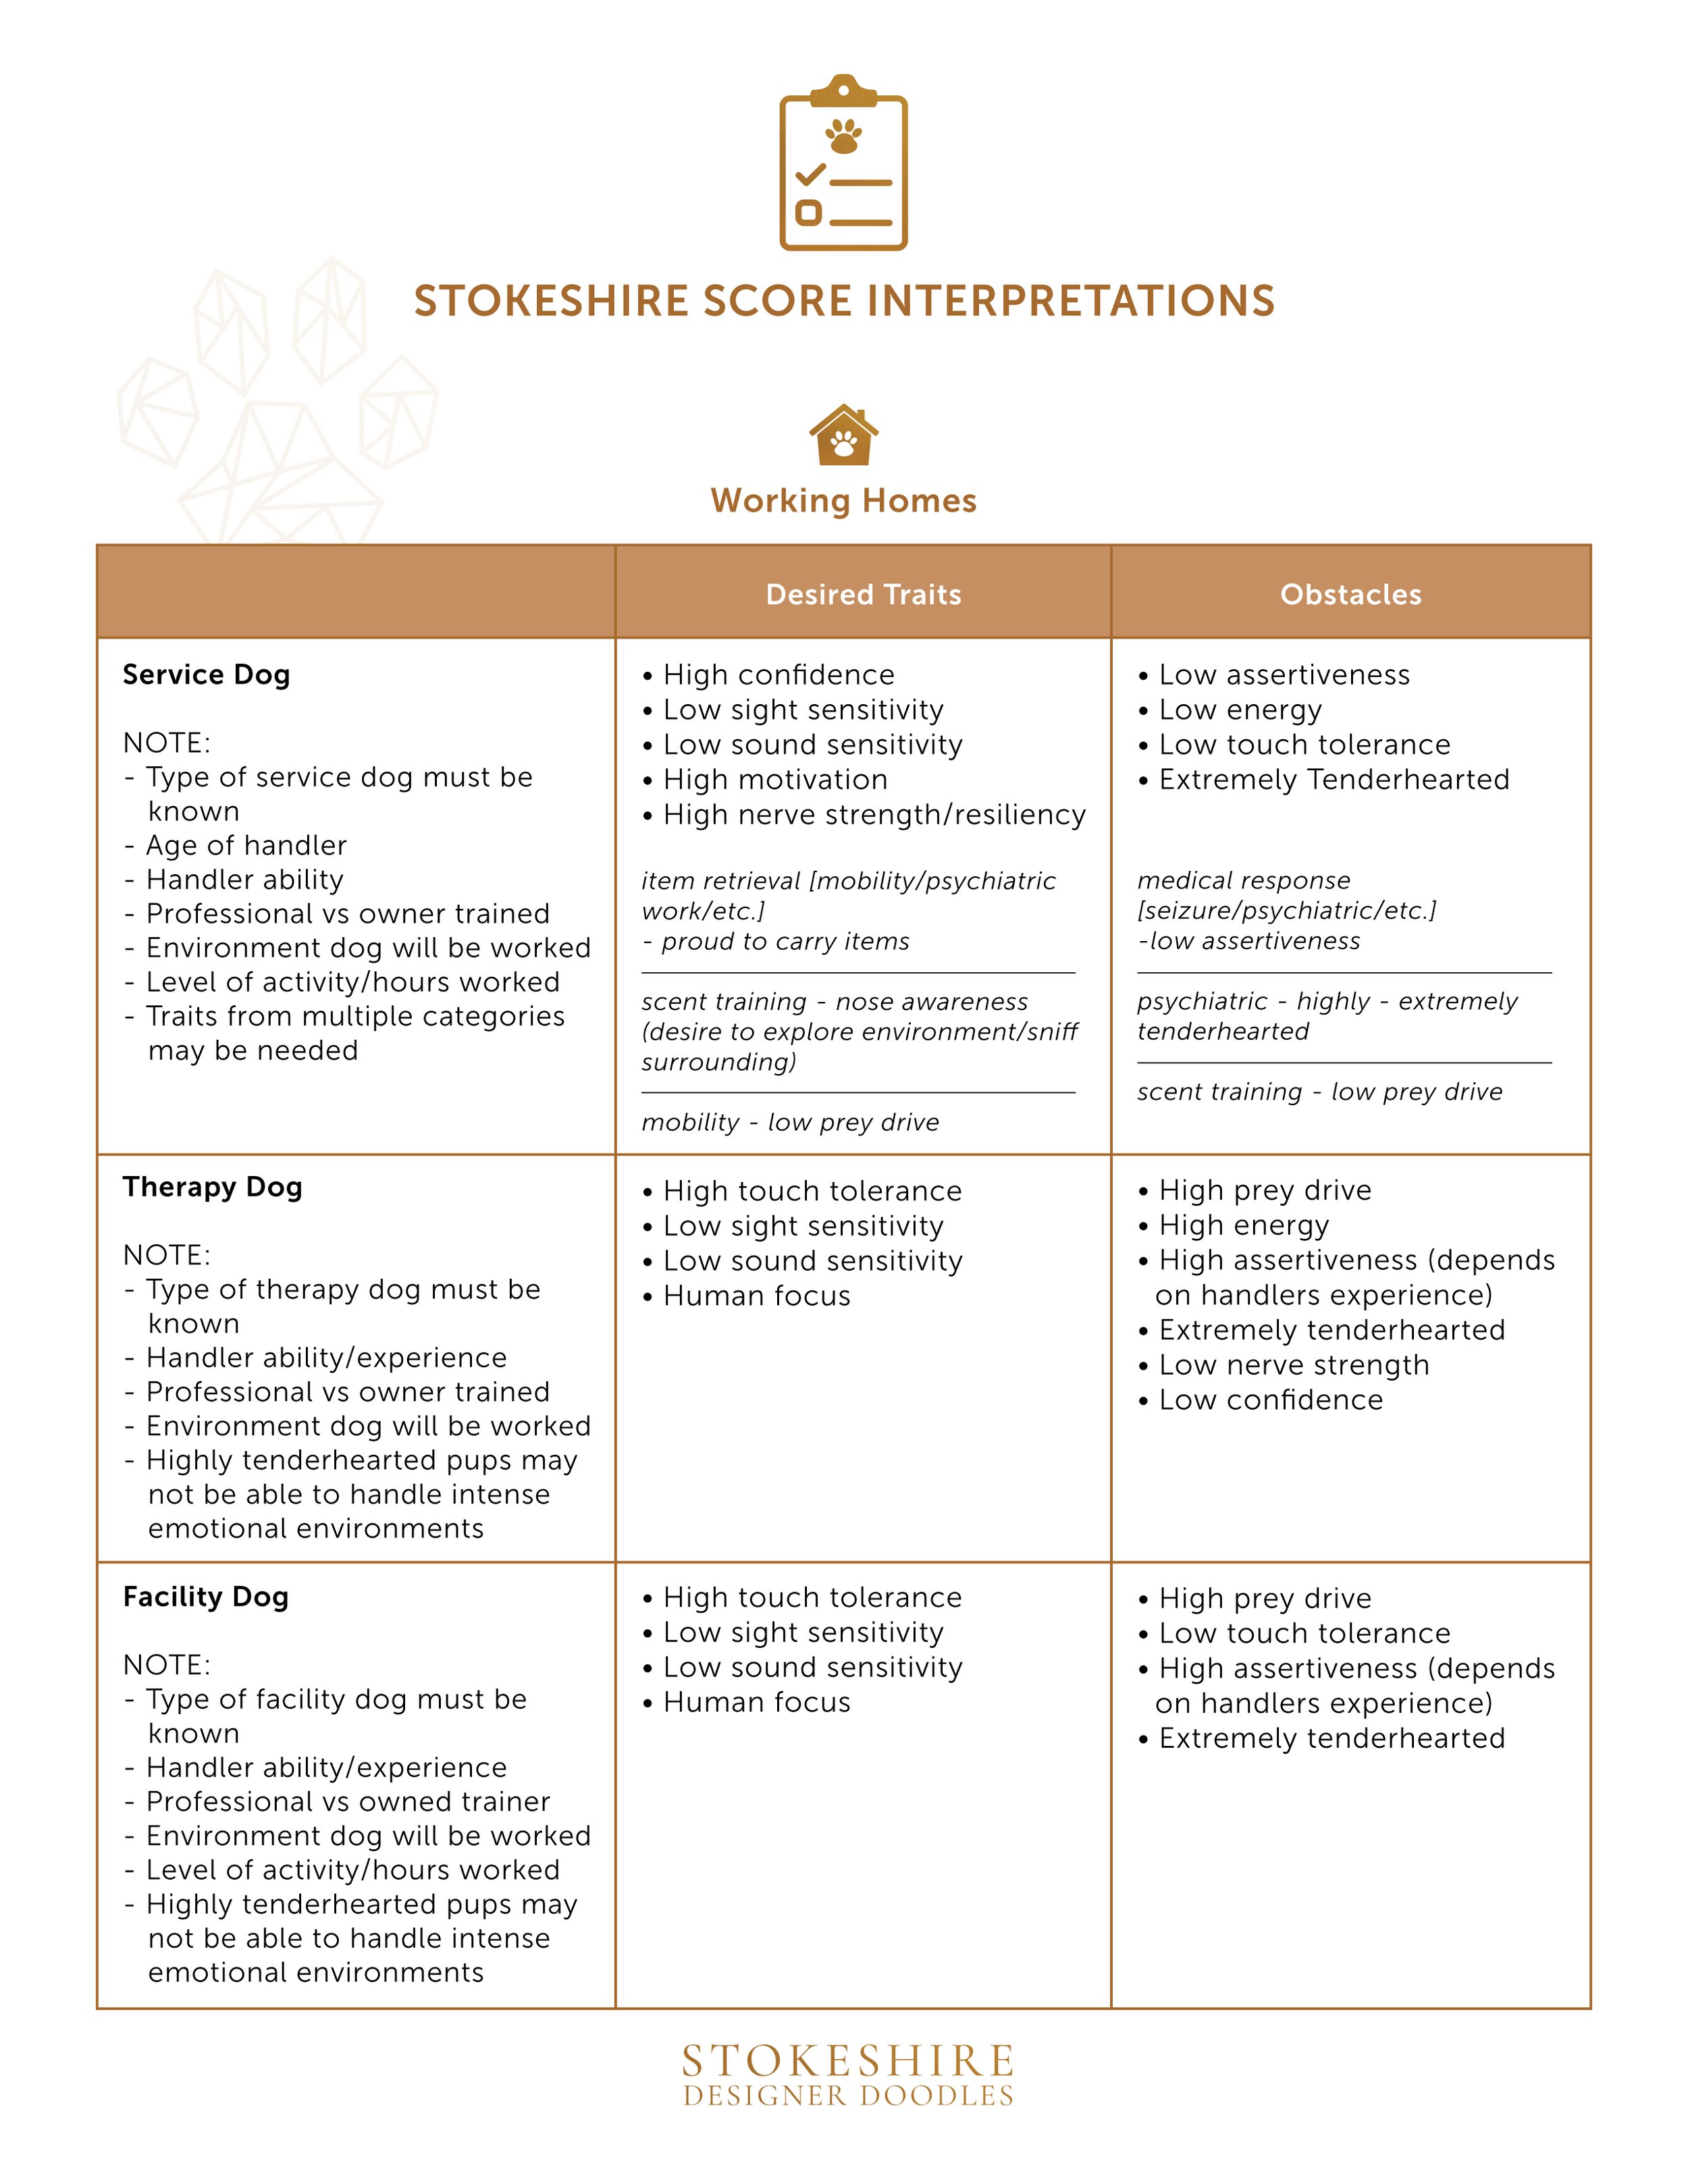 Stokeshire+Score+Interpretations-Page2.jpg